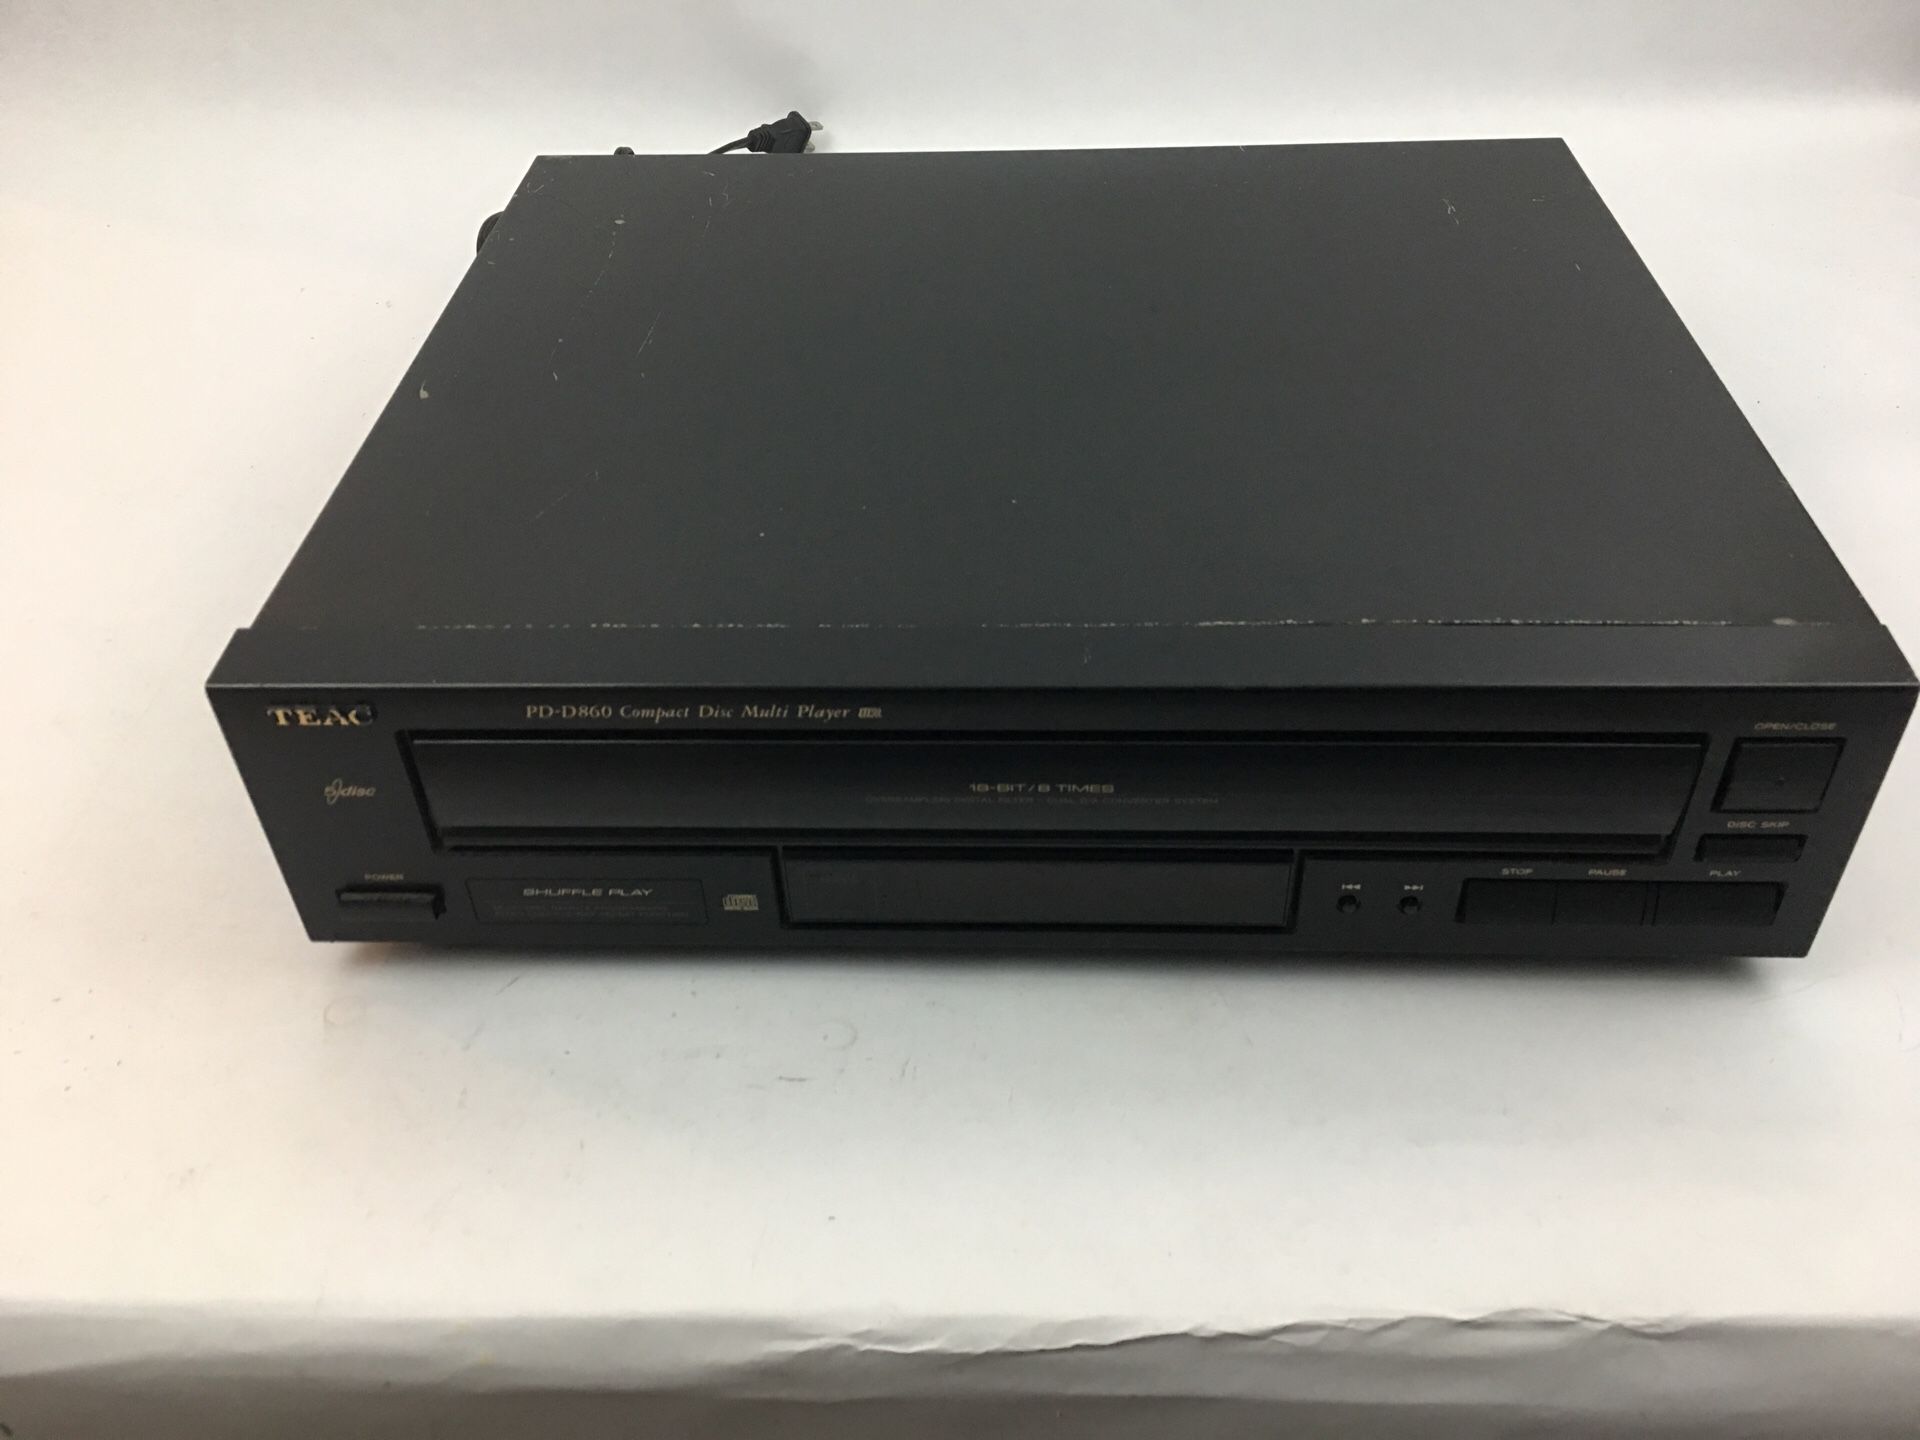 TEAC Model PD-D860 5-Disc Compact Disc Player